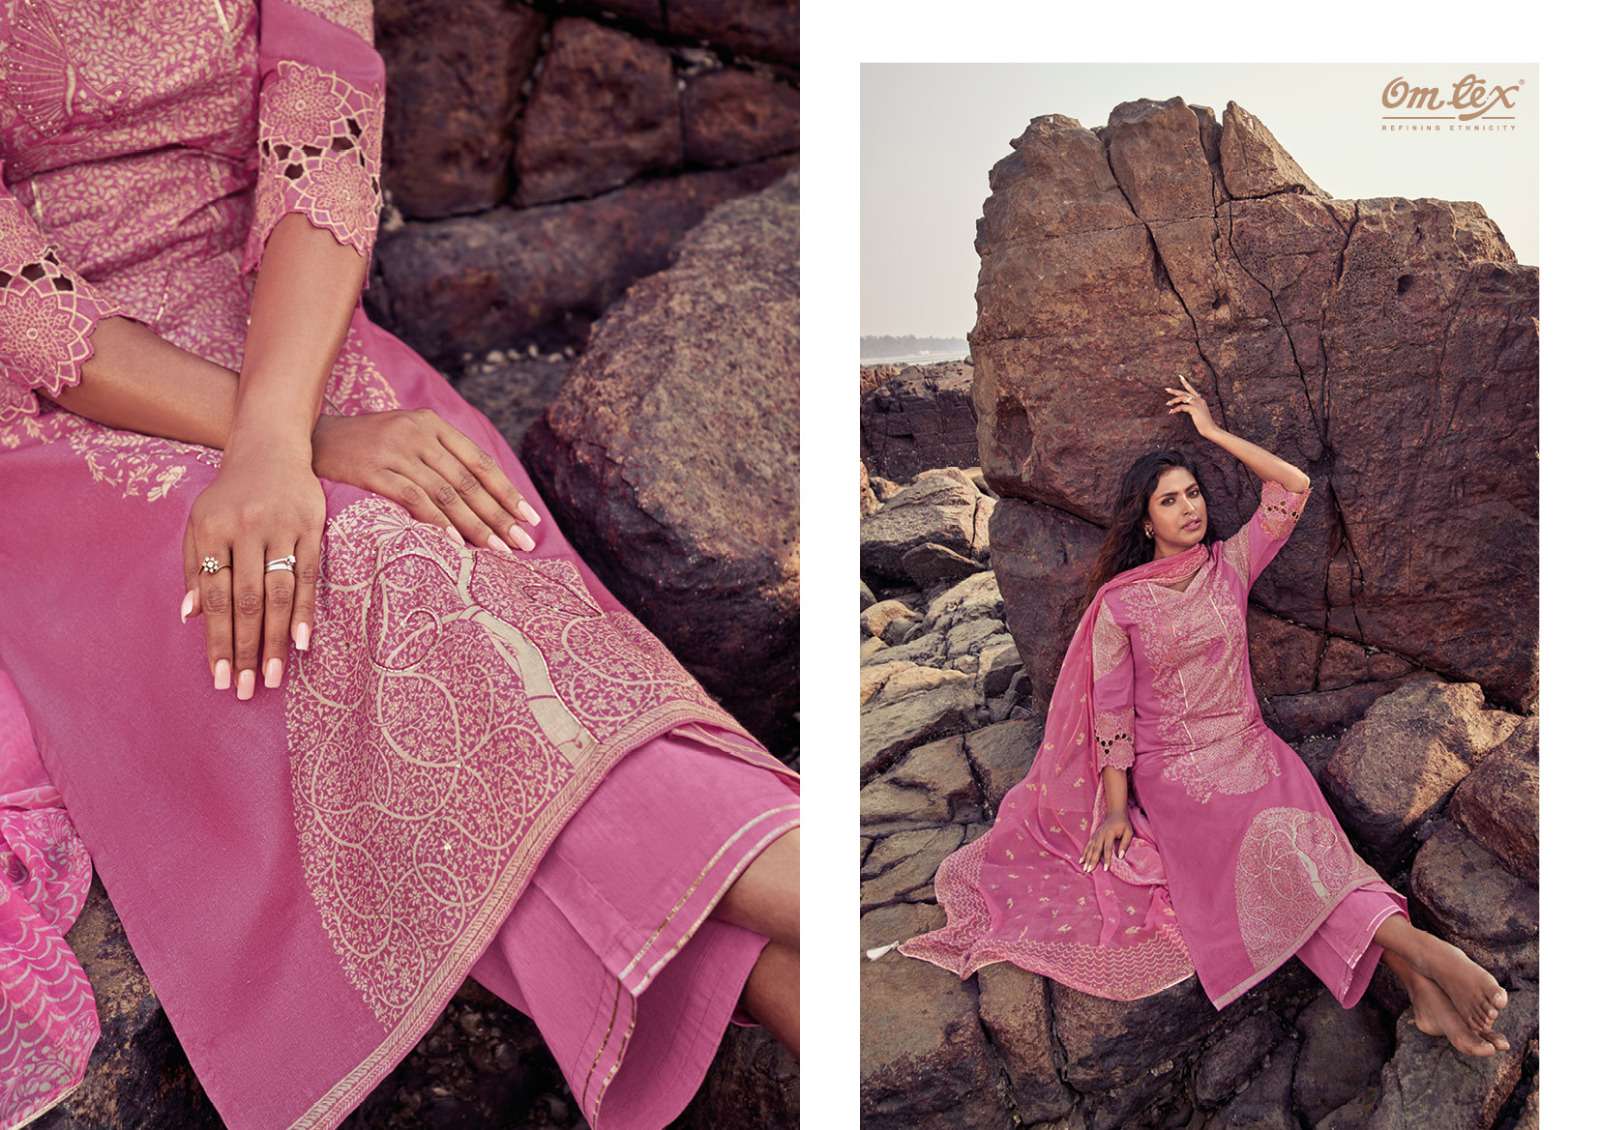 omtex raga 1751 colour series lawn cotton designer salwar suits wholesale best rate